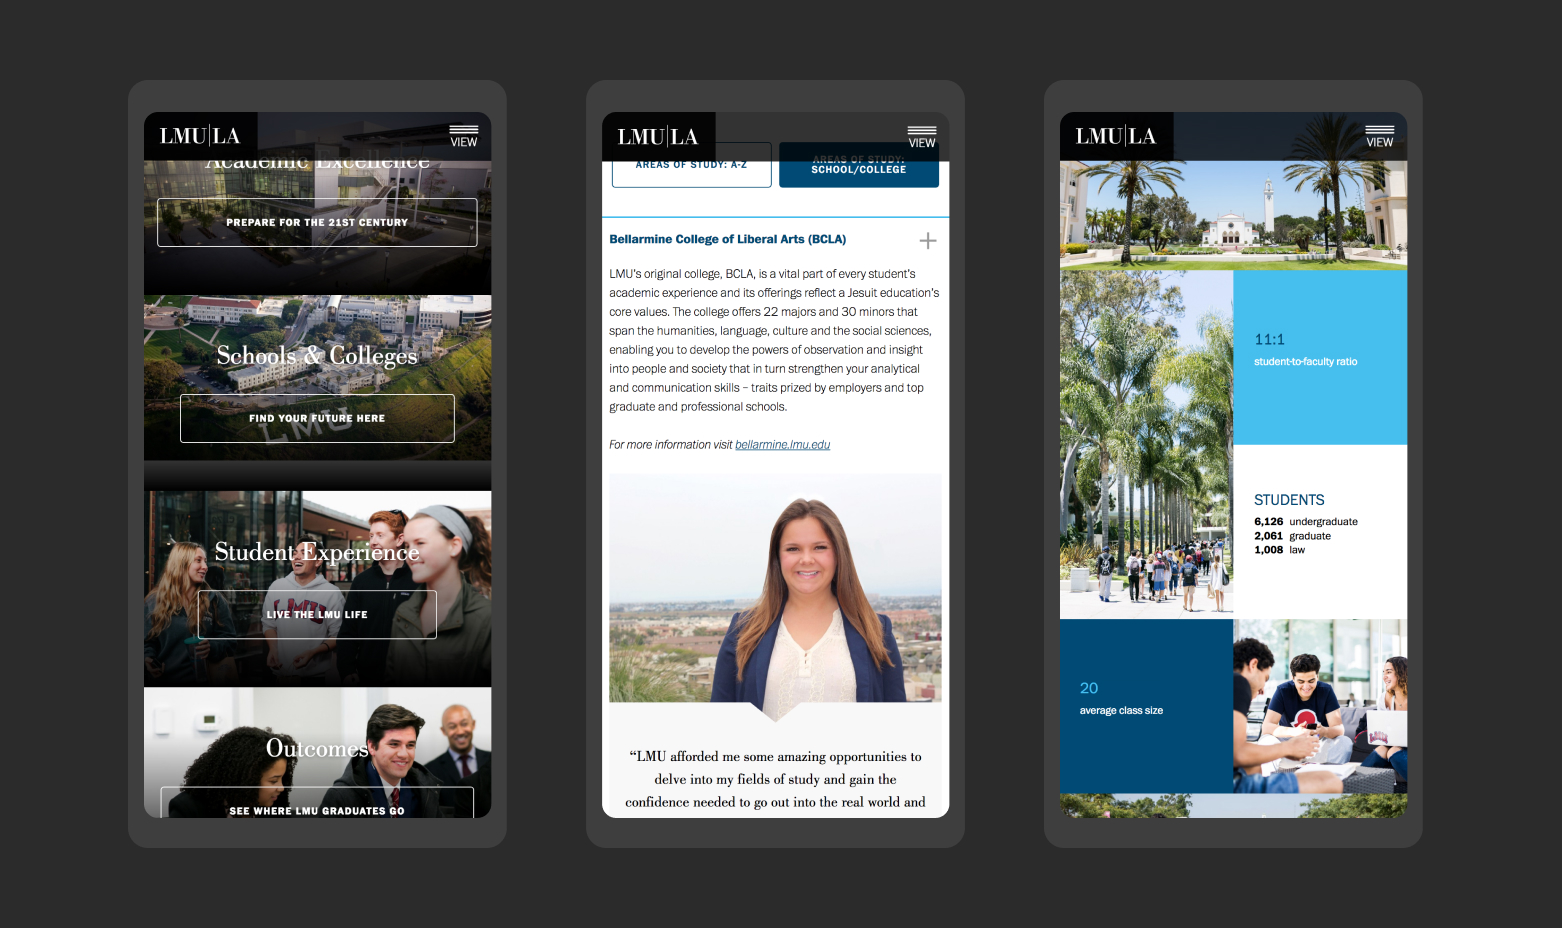 Three mobile displays of Loyola Marymount University viewbook webpages